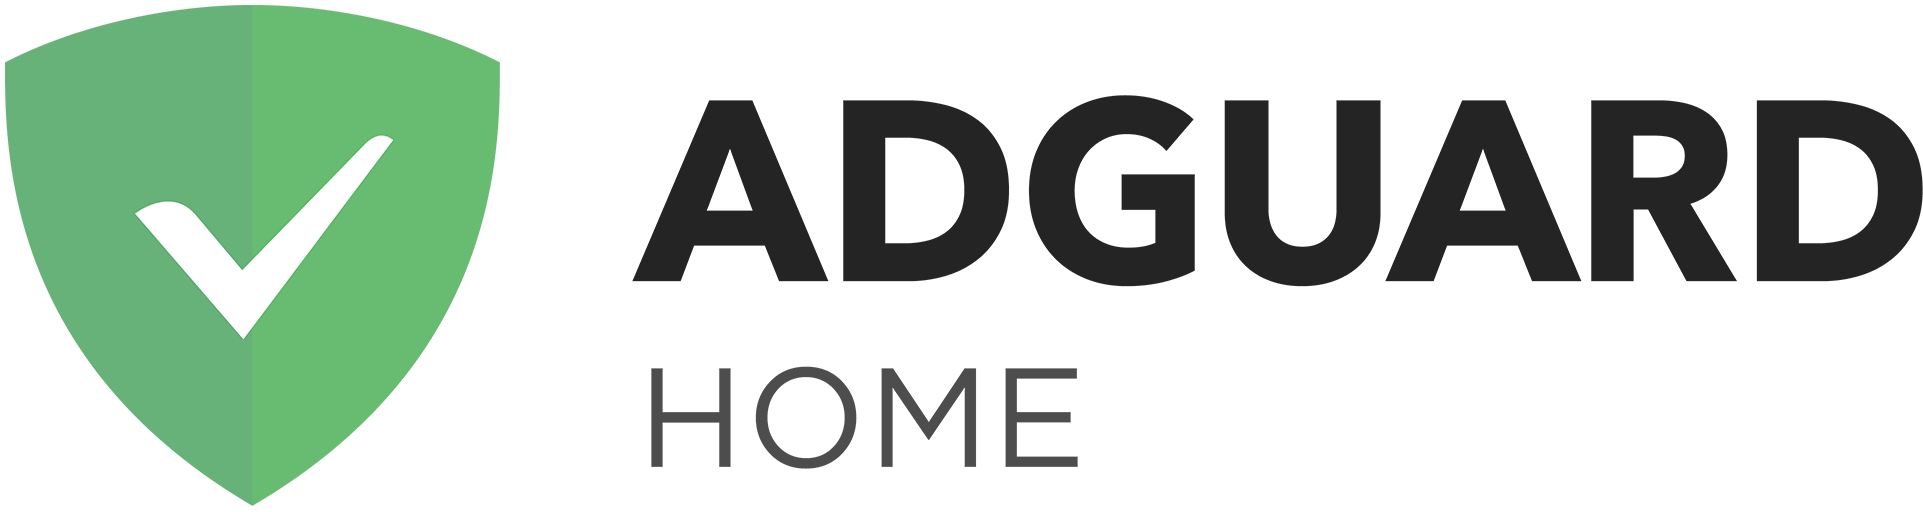 adguard home wiki